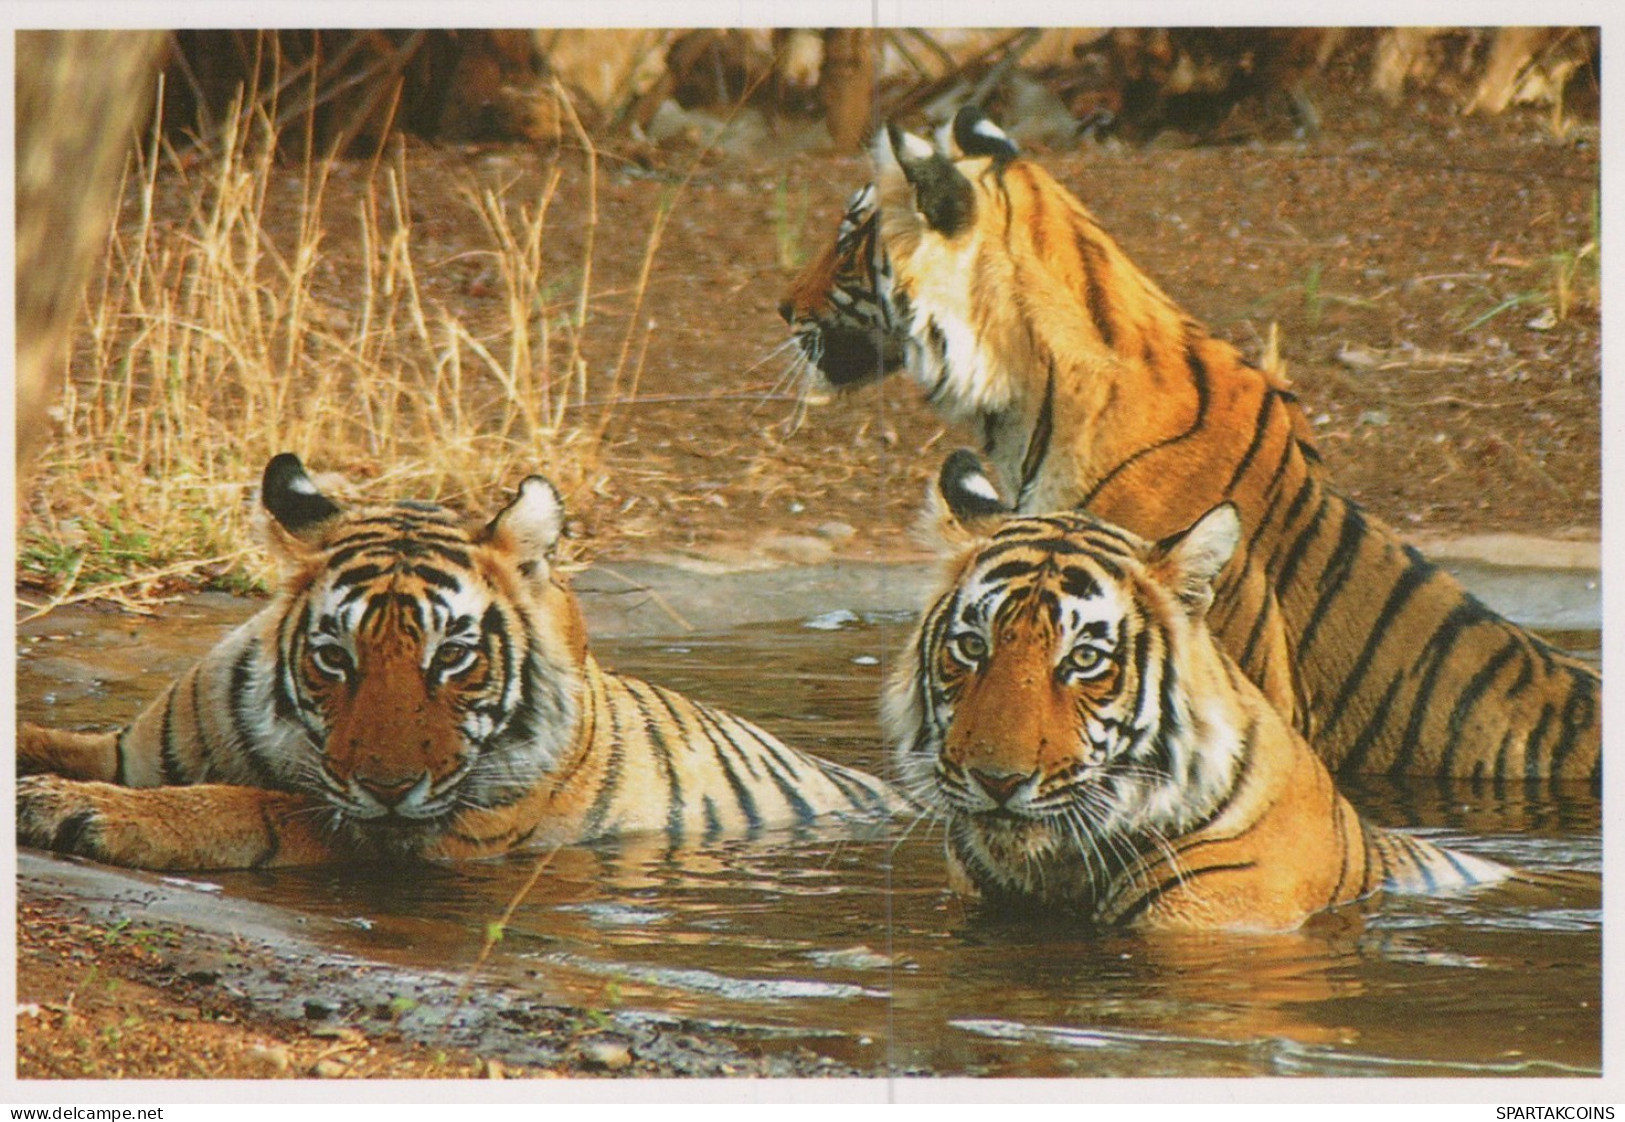 TIGER BIG CAT Animals Vintage Postcard CPSM Unposted #PAM031.A - Tigres